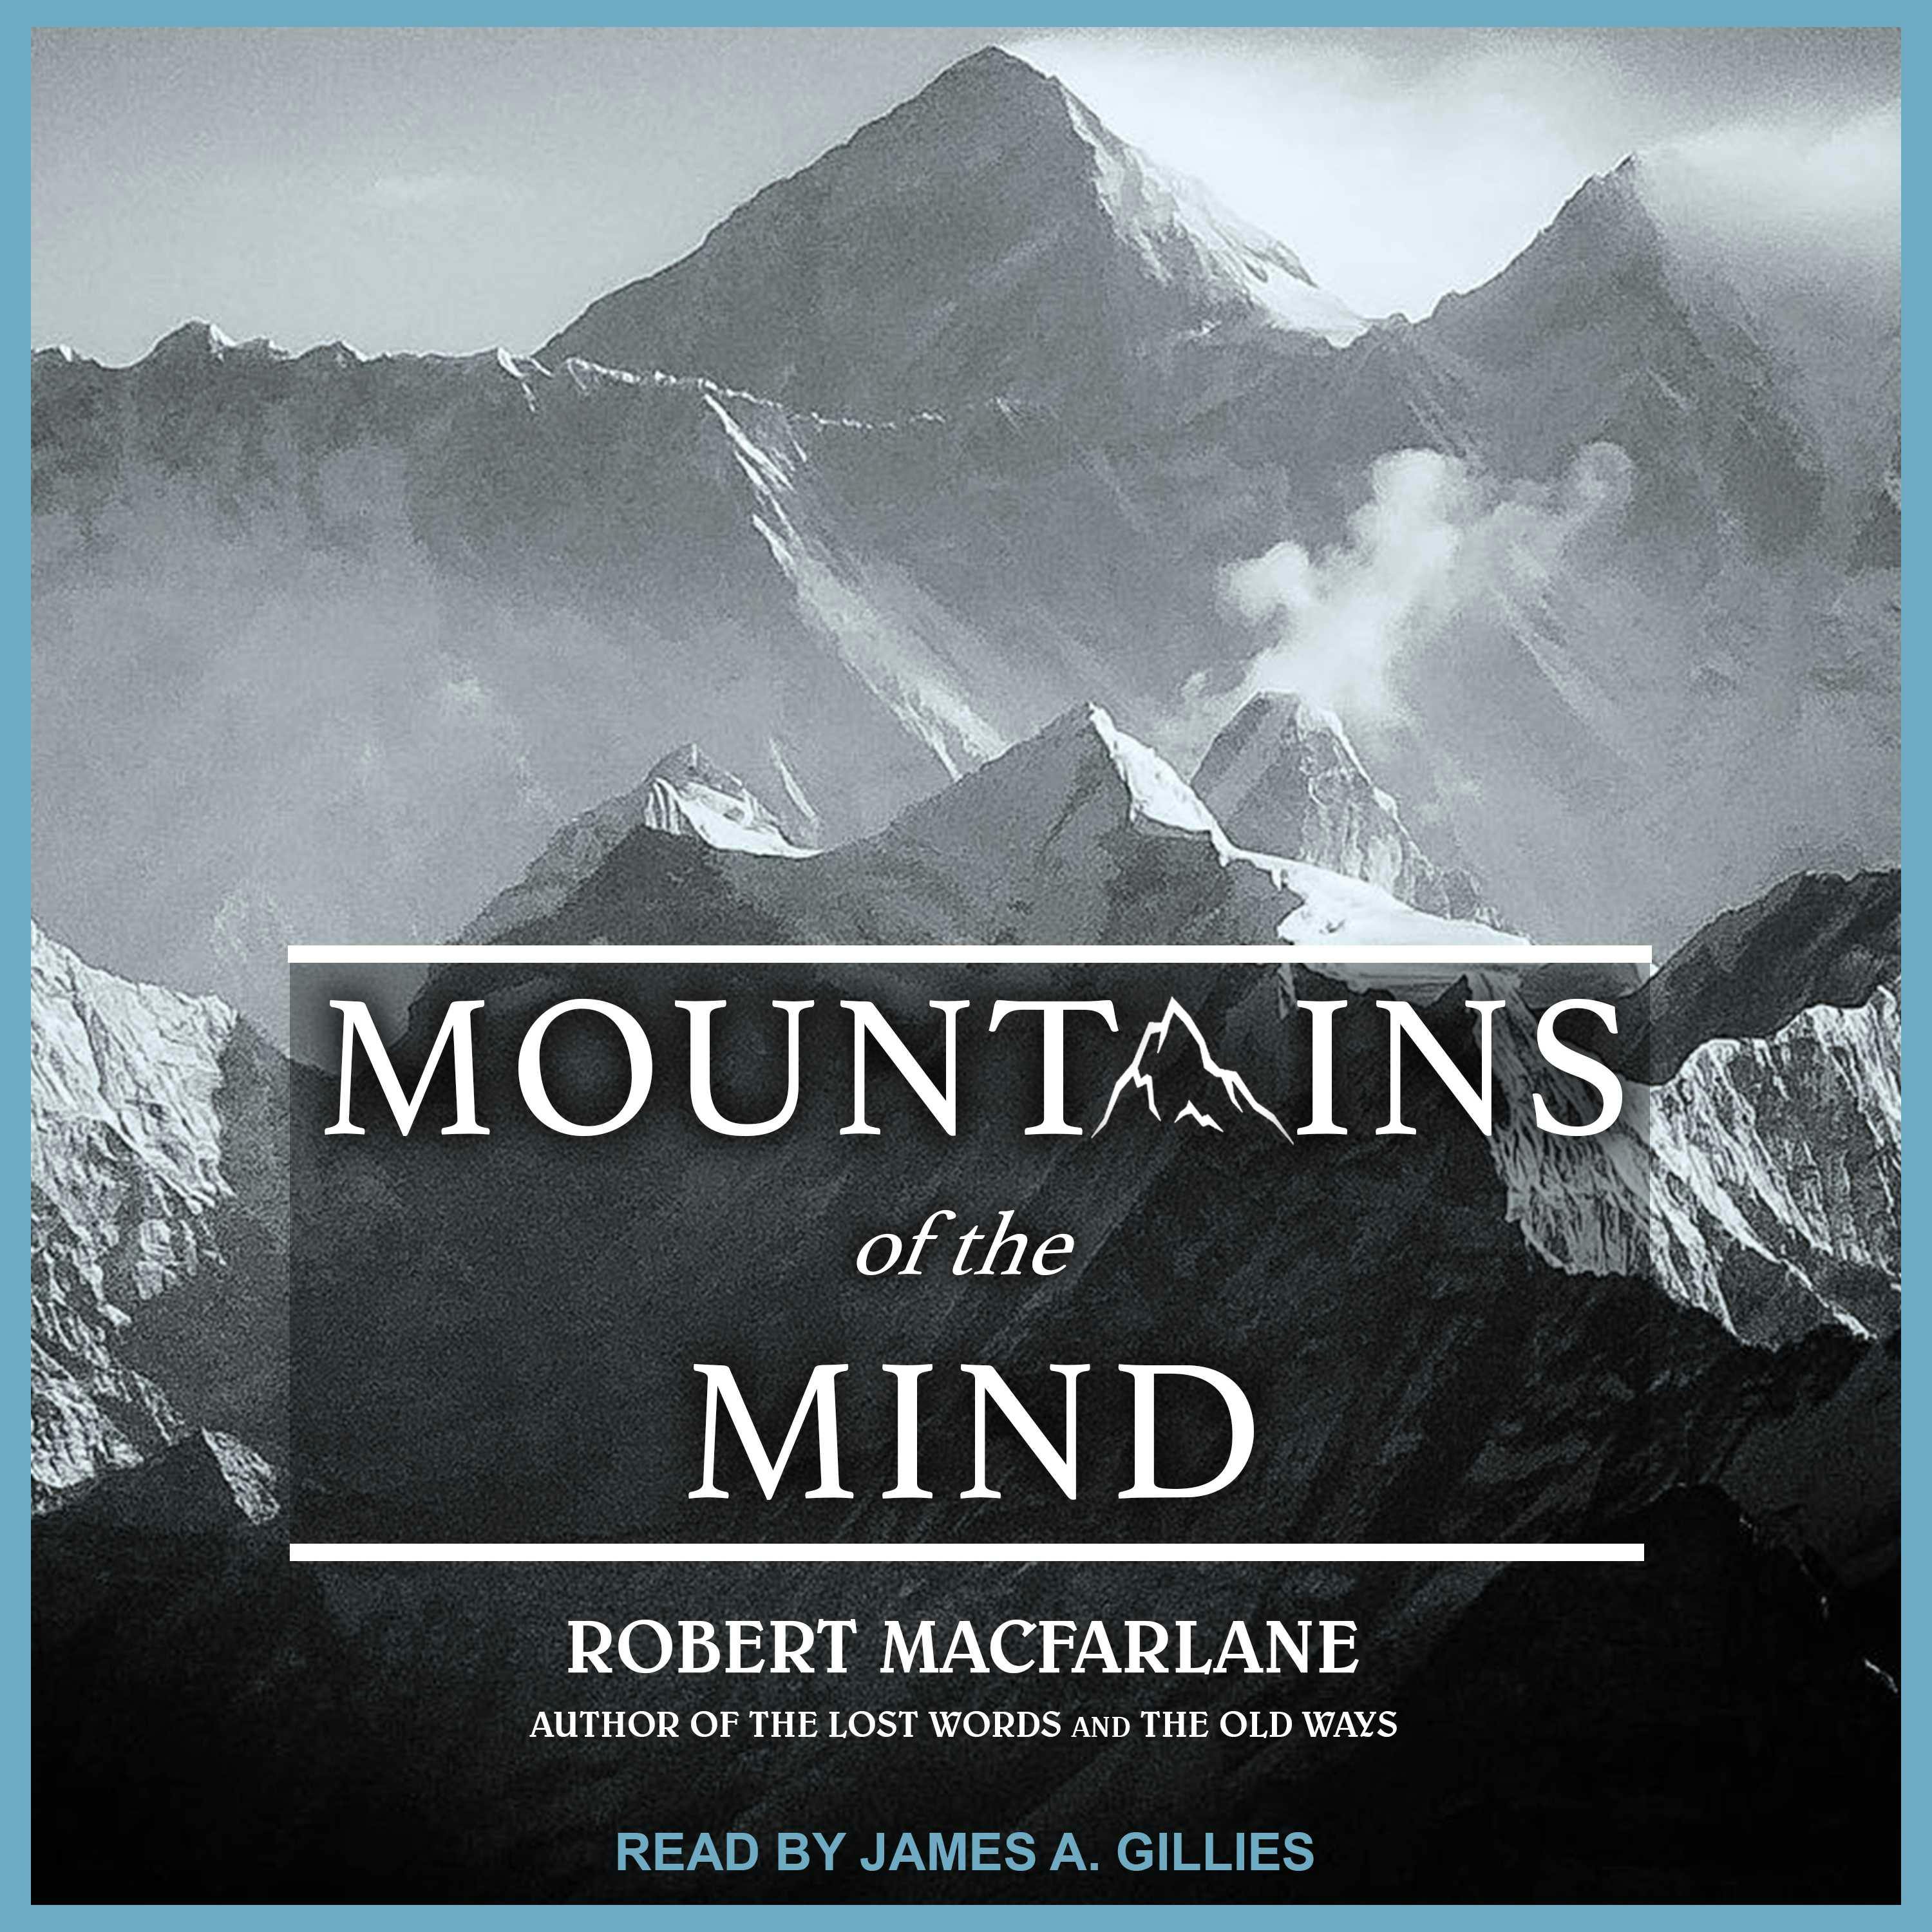 Mountains of the Mind - Robert Macfarlane